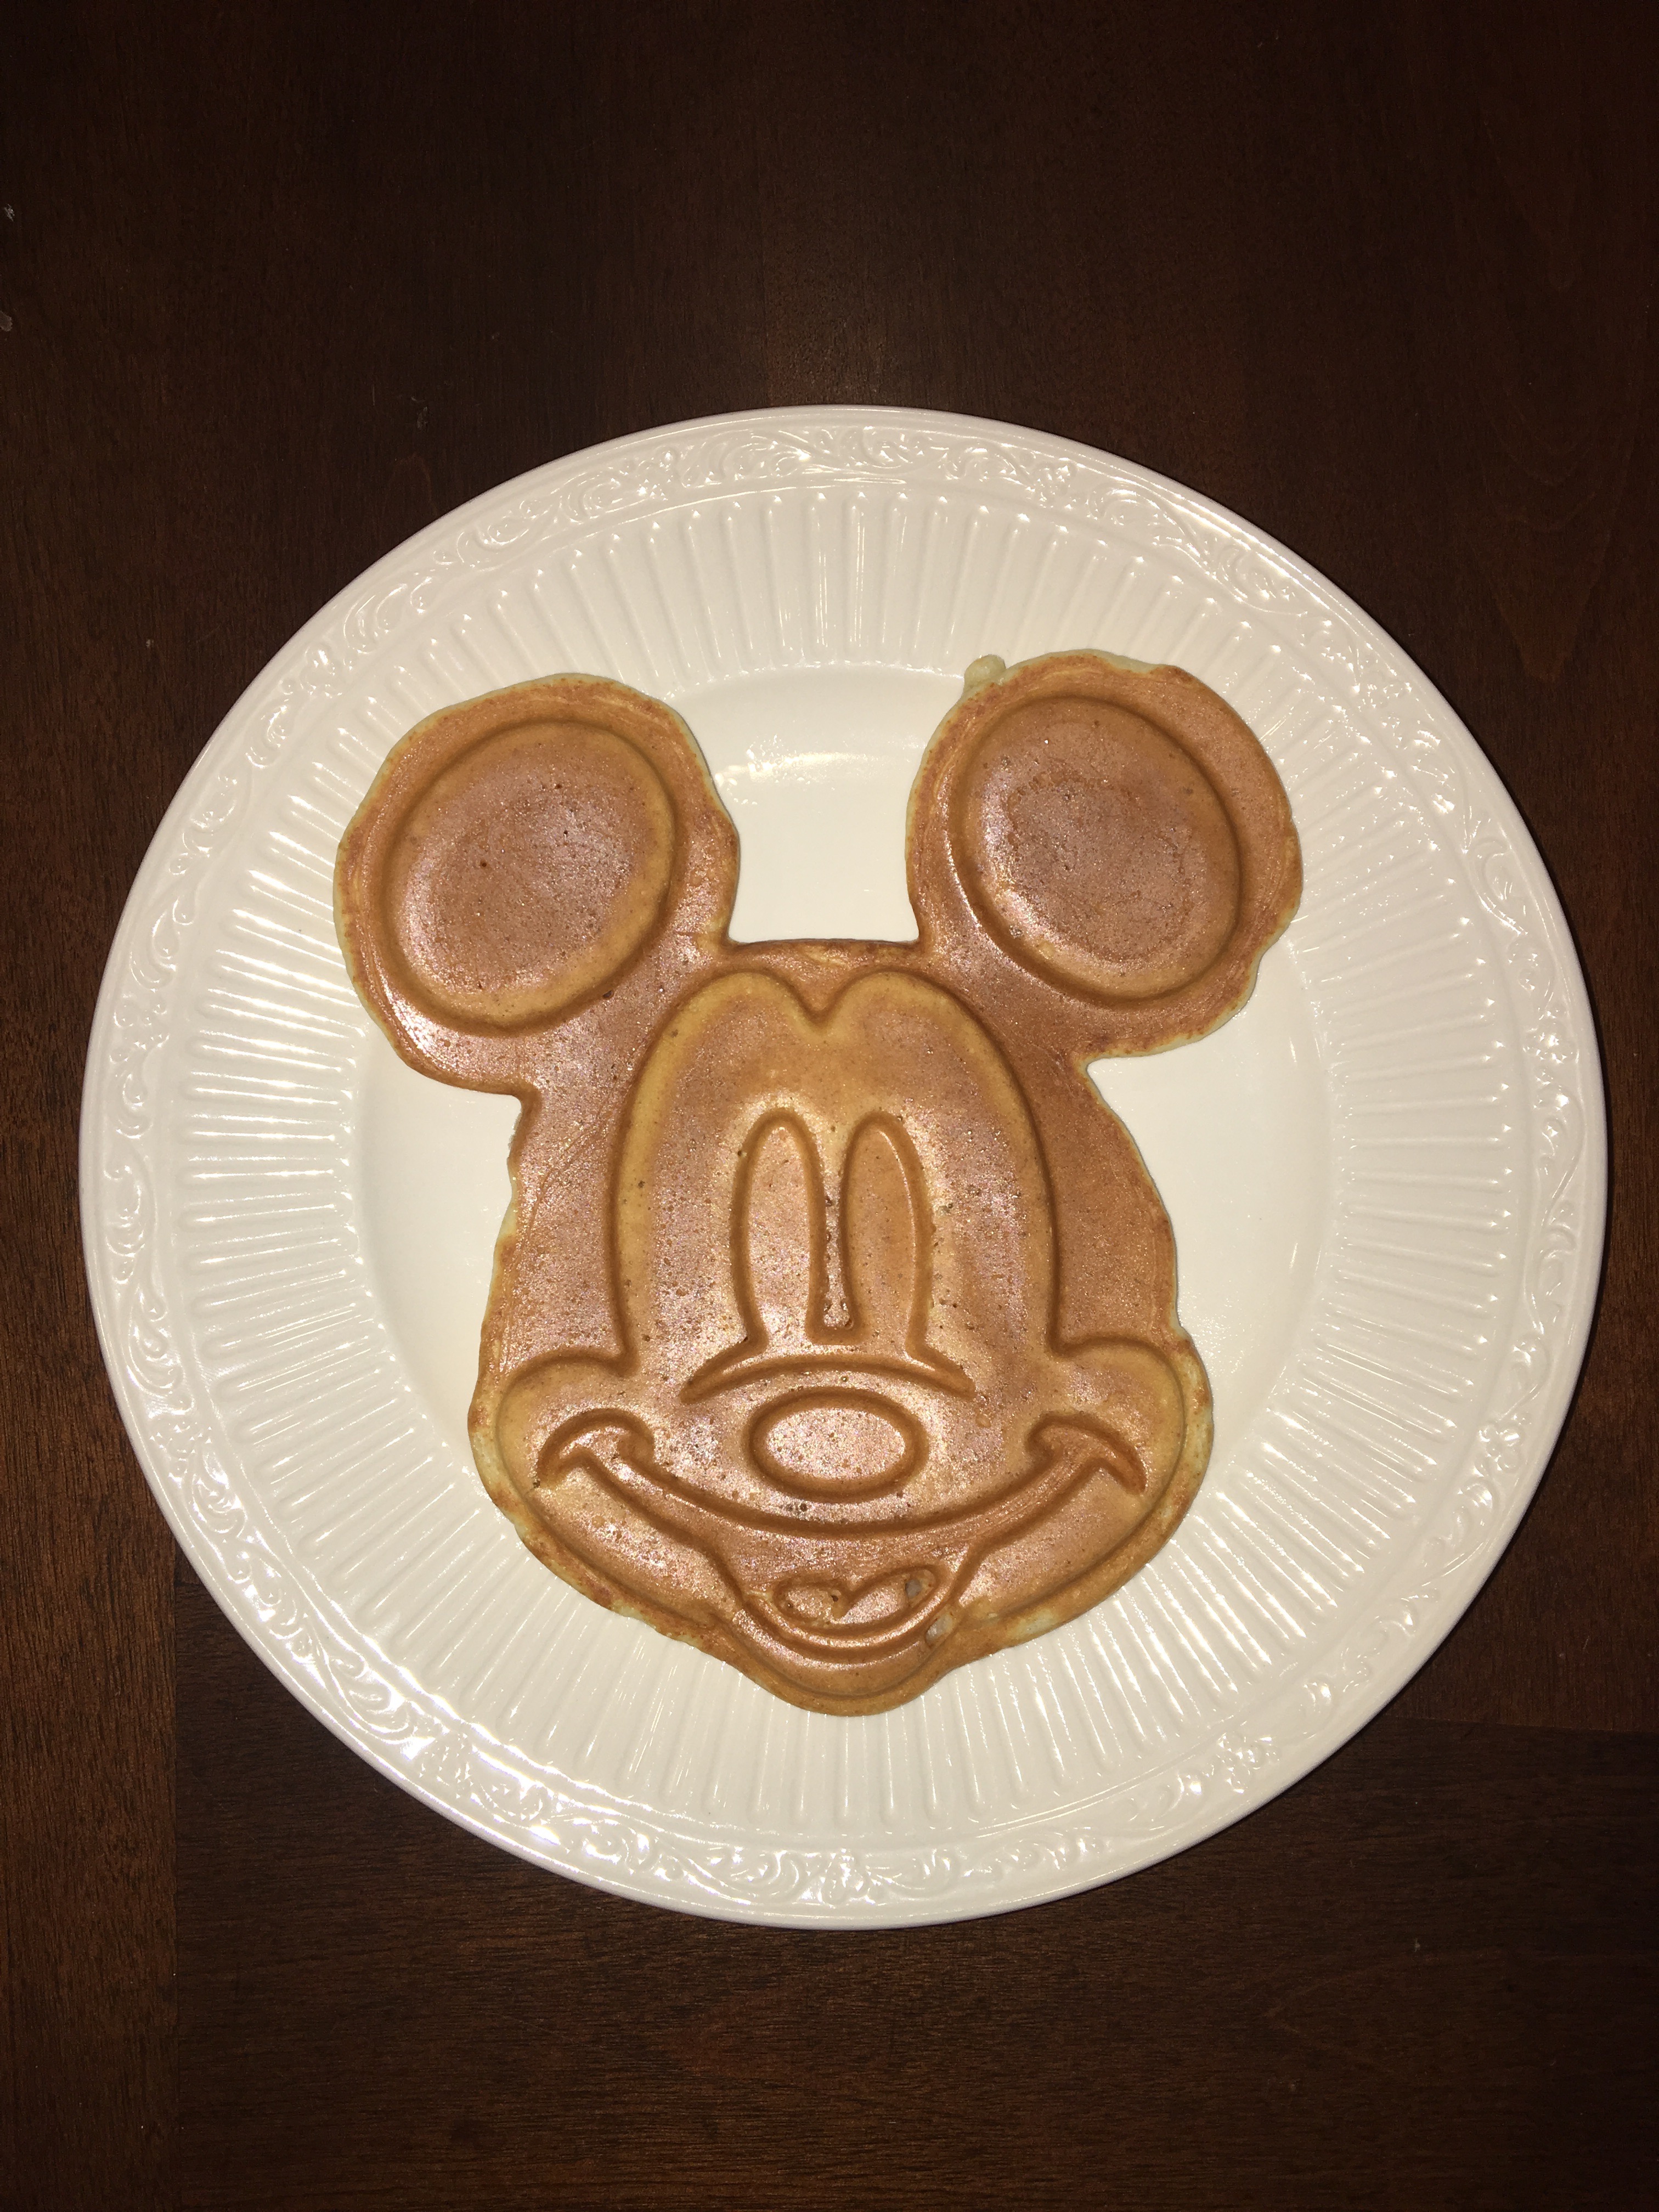 http://www.momapprovedblog.com/wp-content/uploads/2016/06/Full-Size-Mickey-Waffle.jpg